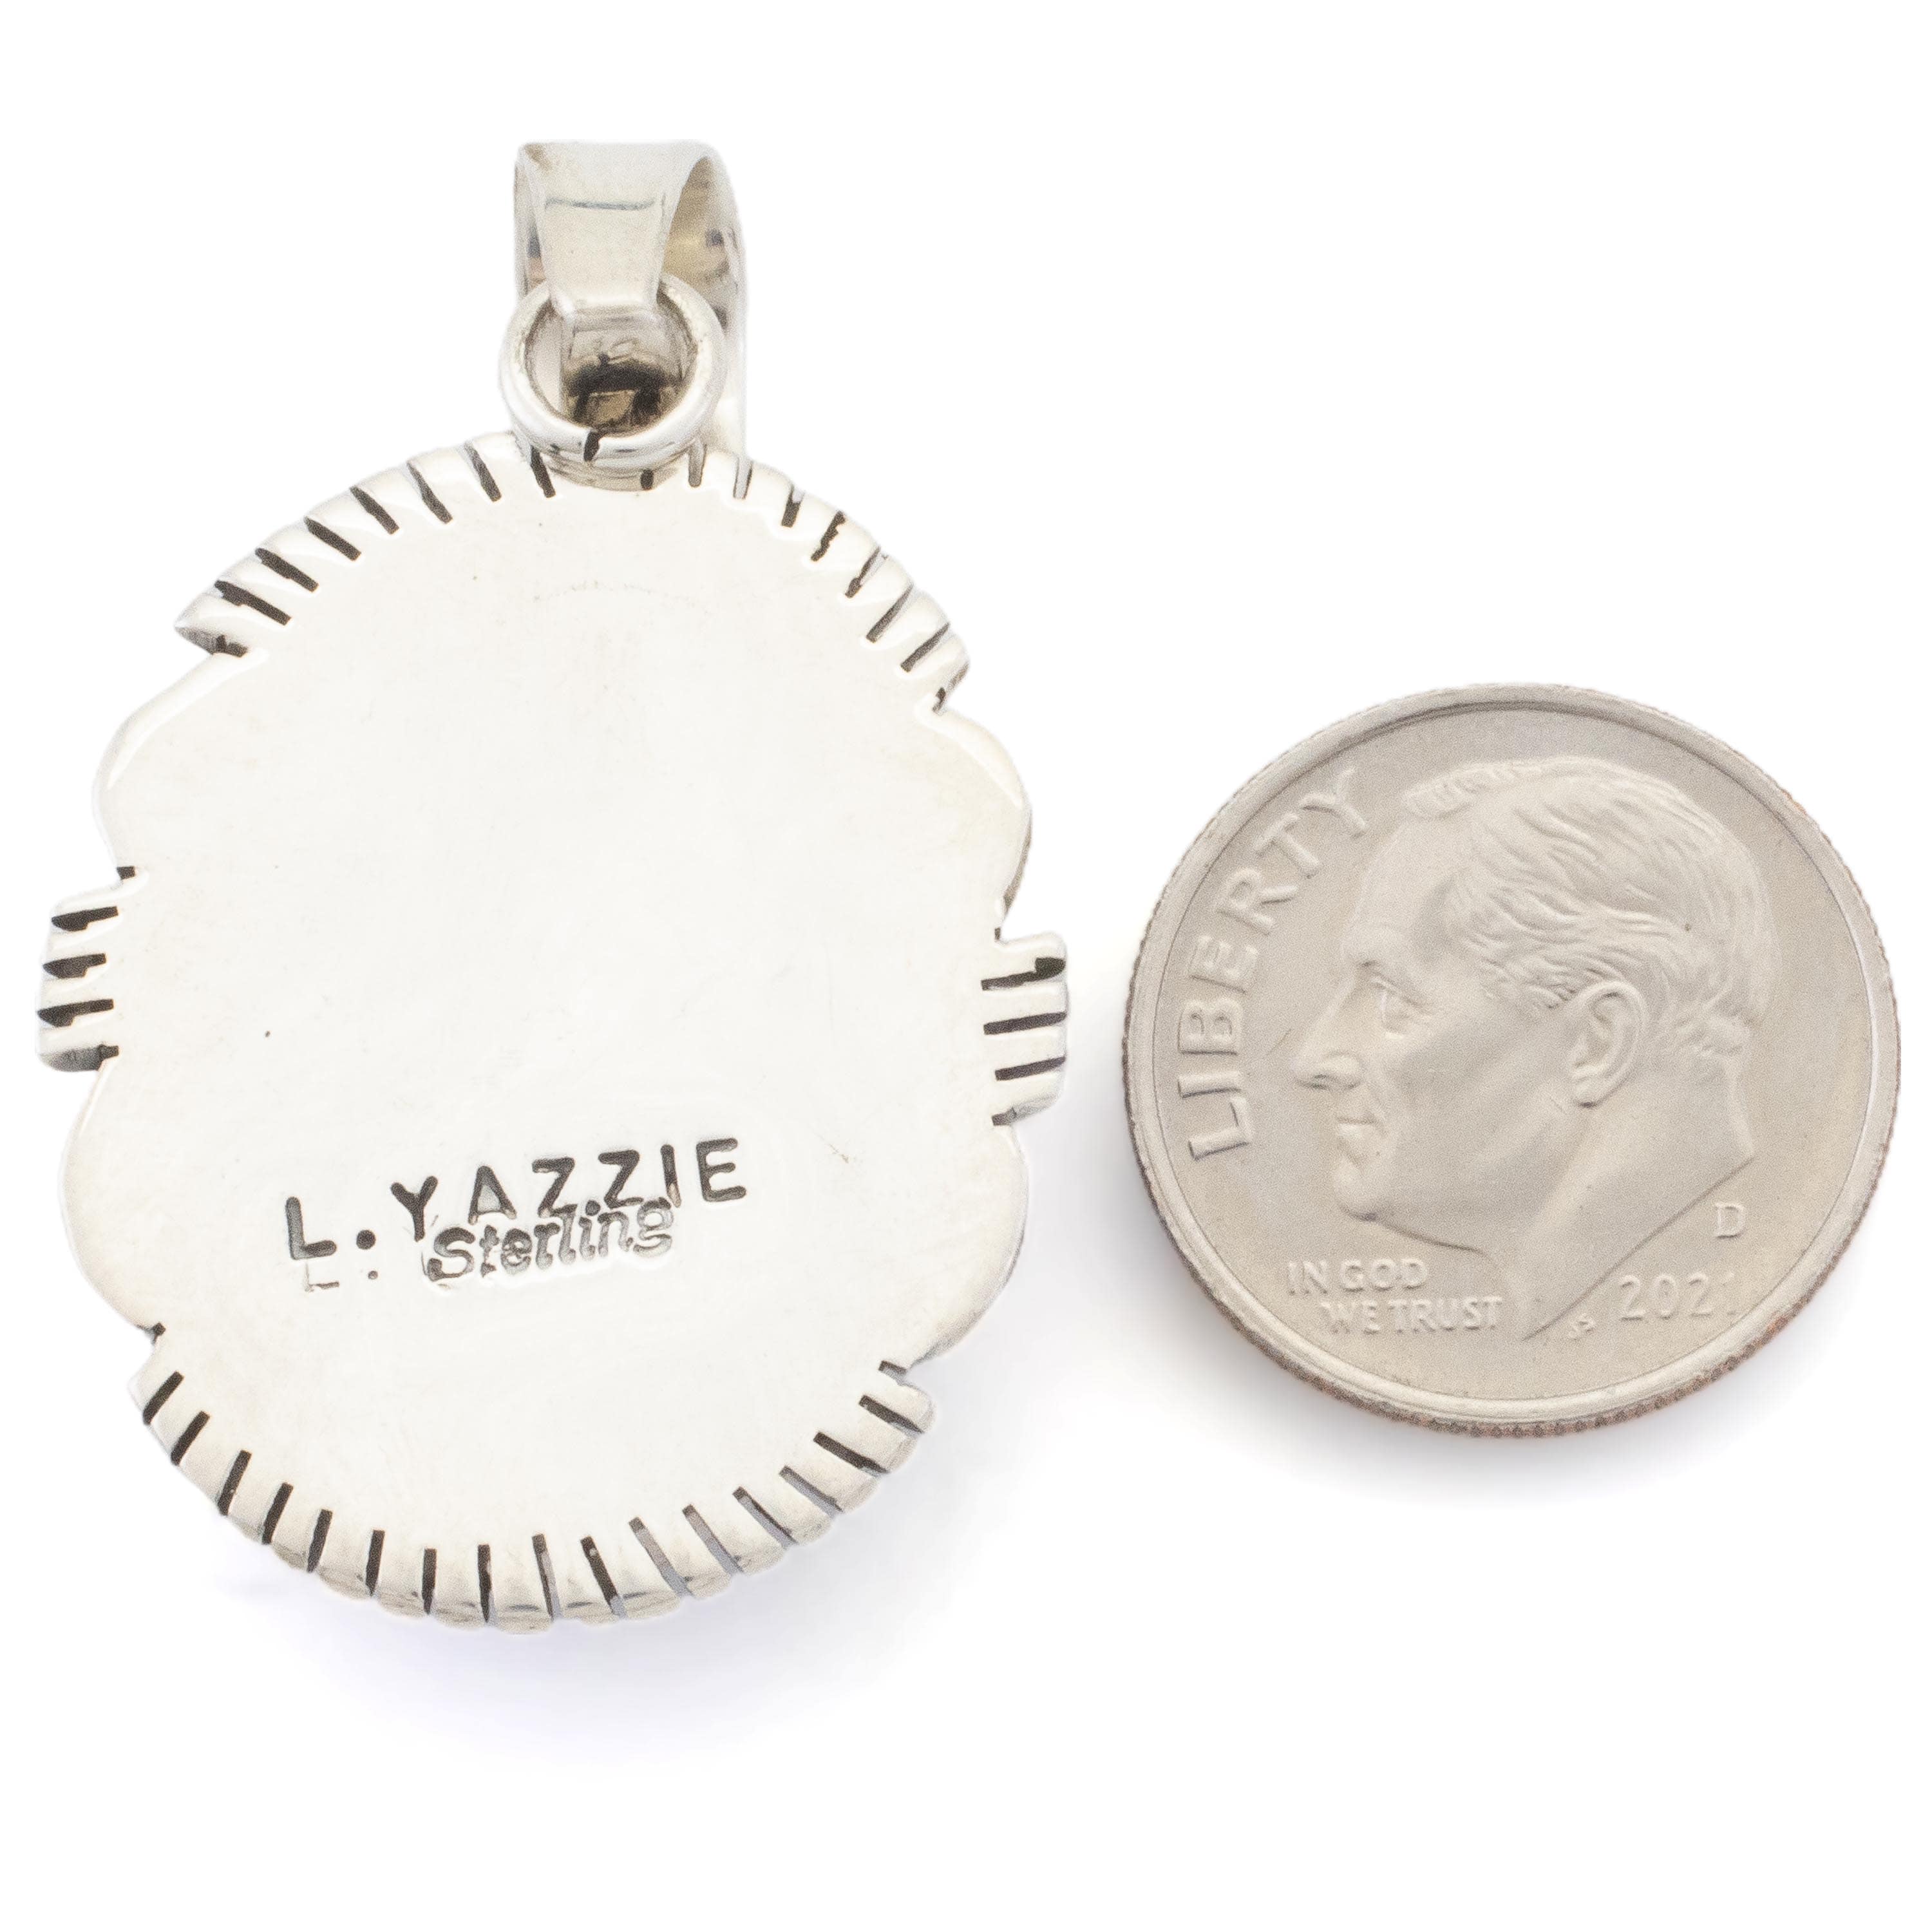 Kalifano Native American Jewelry Larry Yazzie Lapis USA Native American Made 925 Sterling Silver Pendant NAN700.010